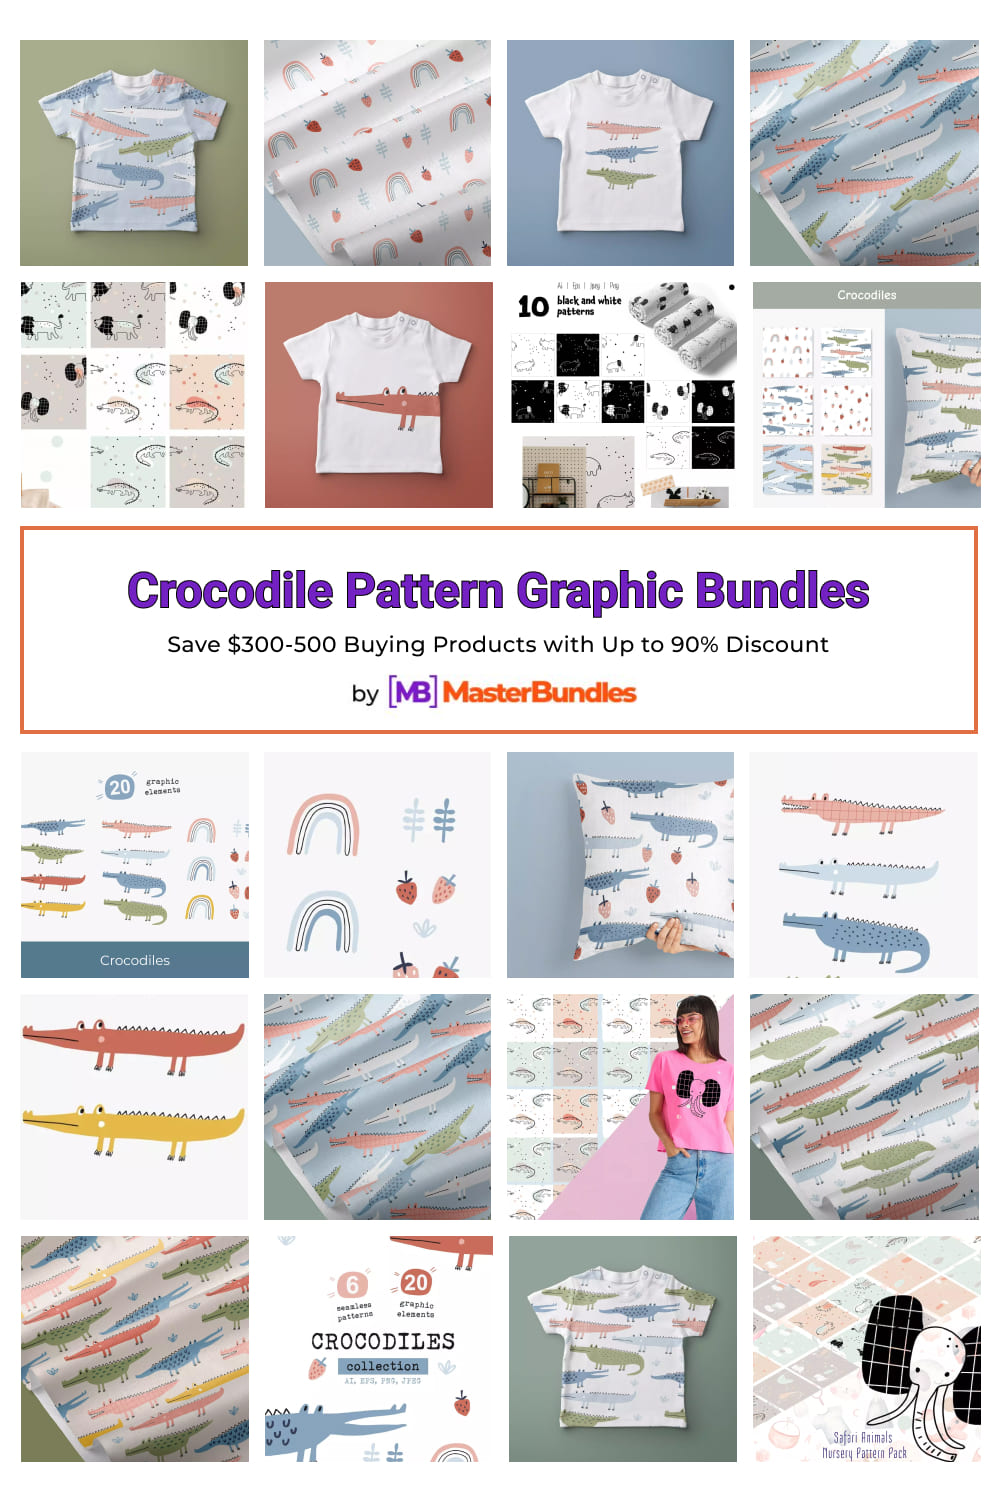 Crocodile Pattern Graphic Bundles for Pinterest.